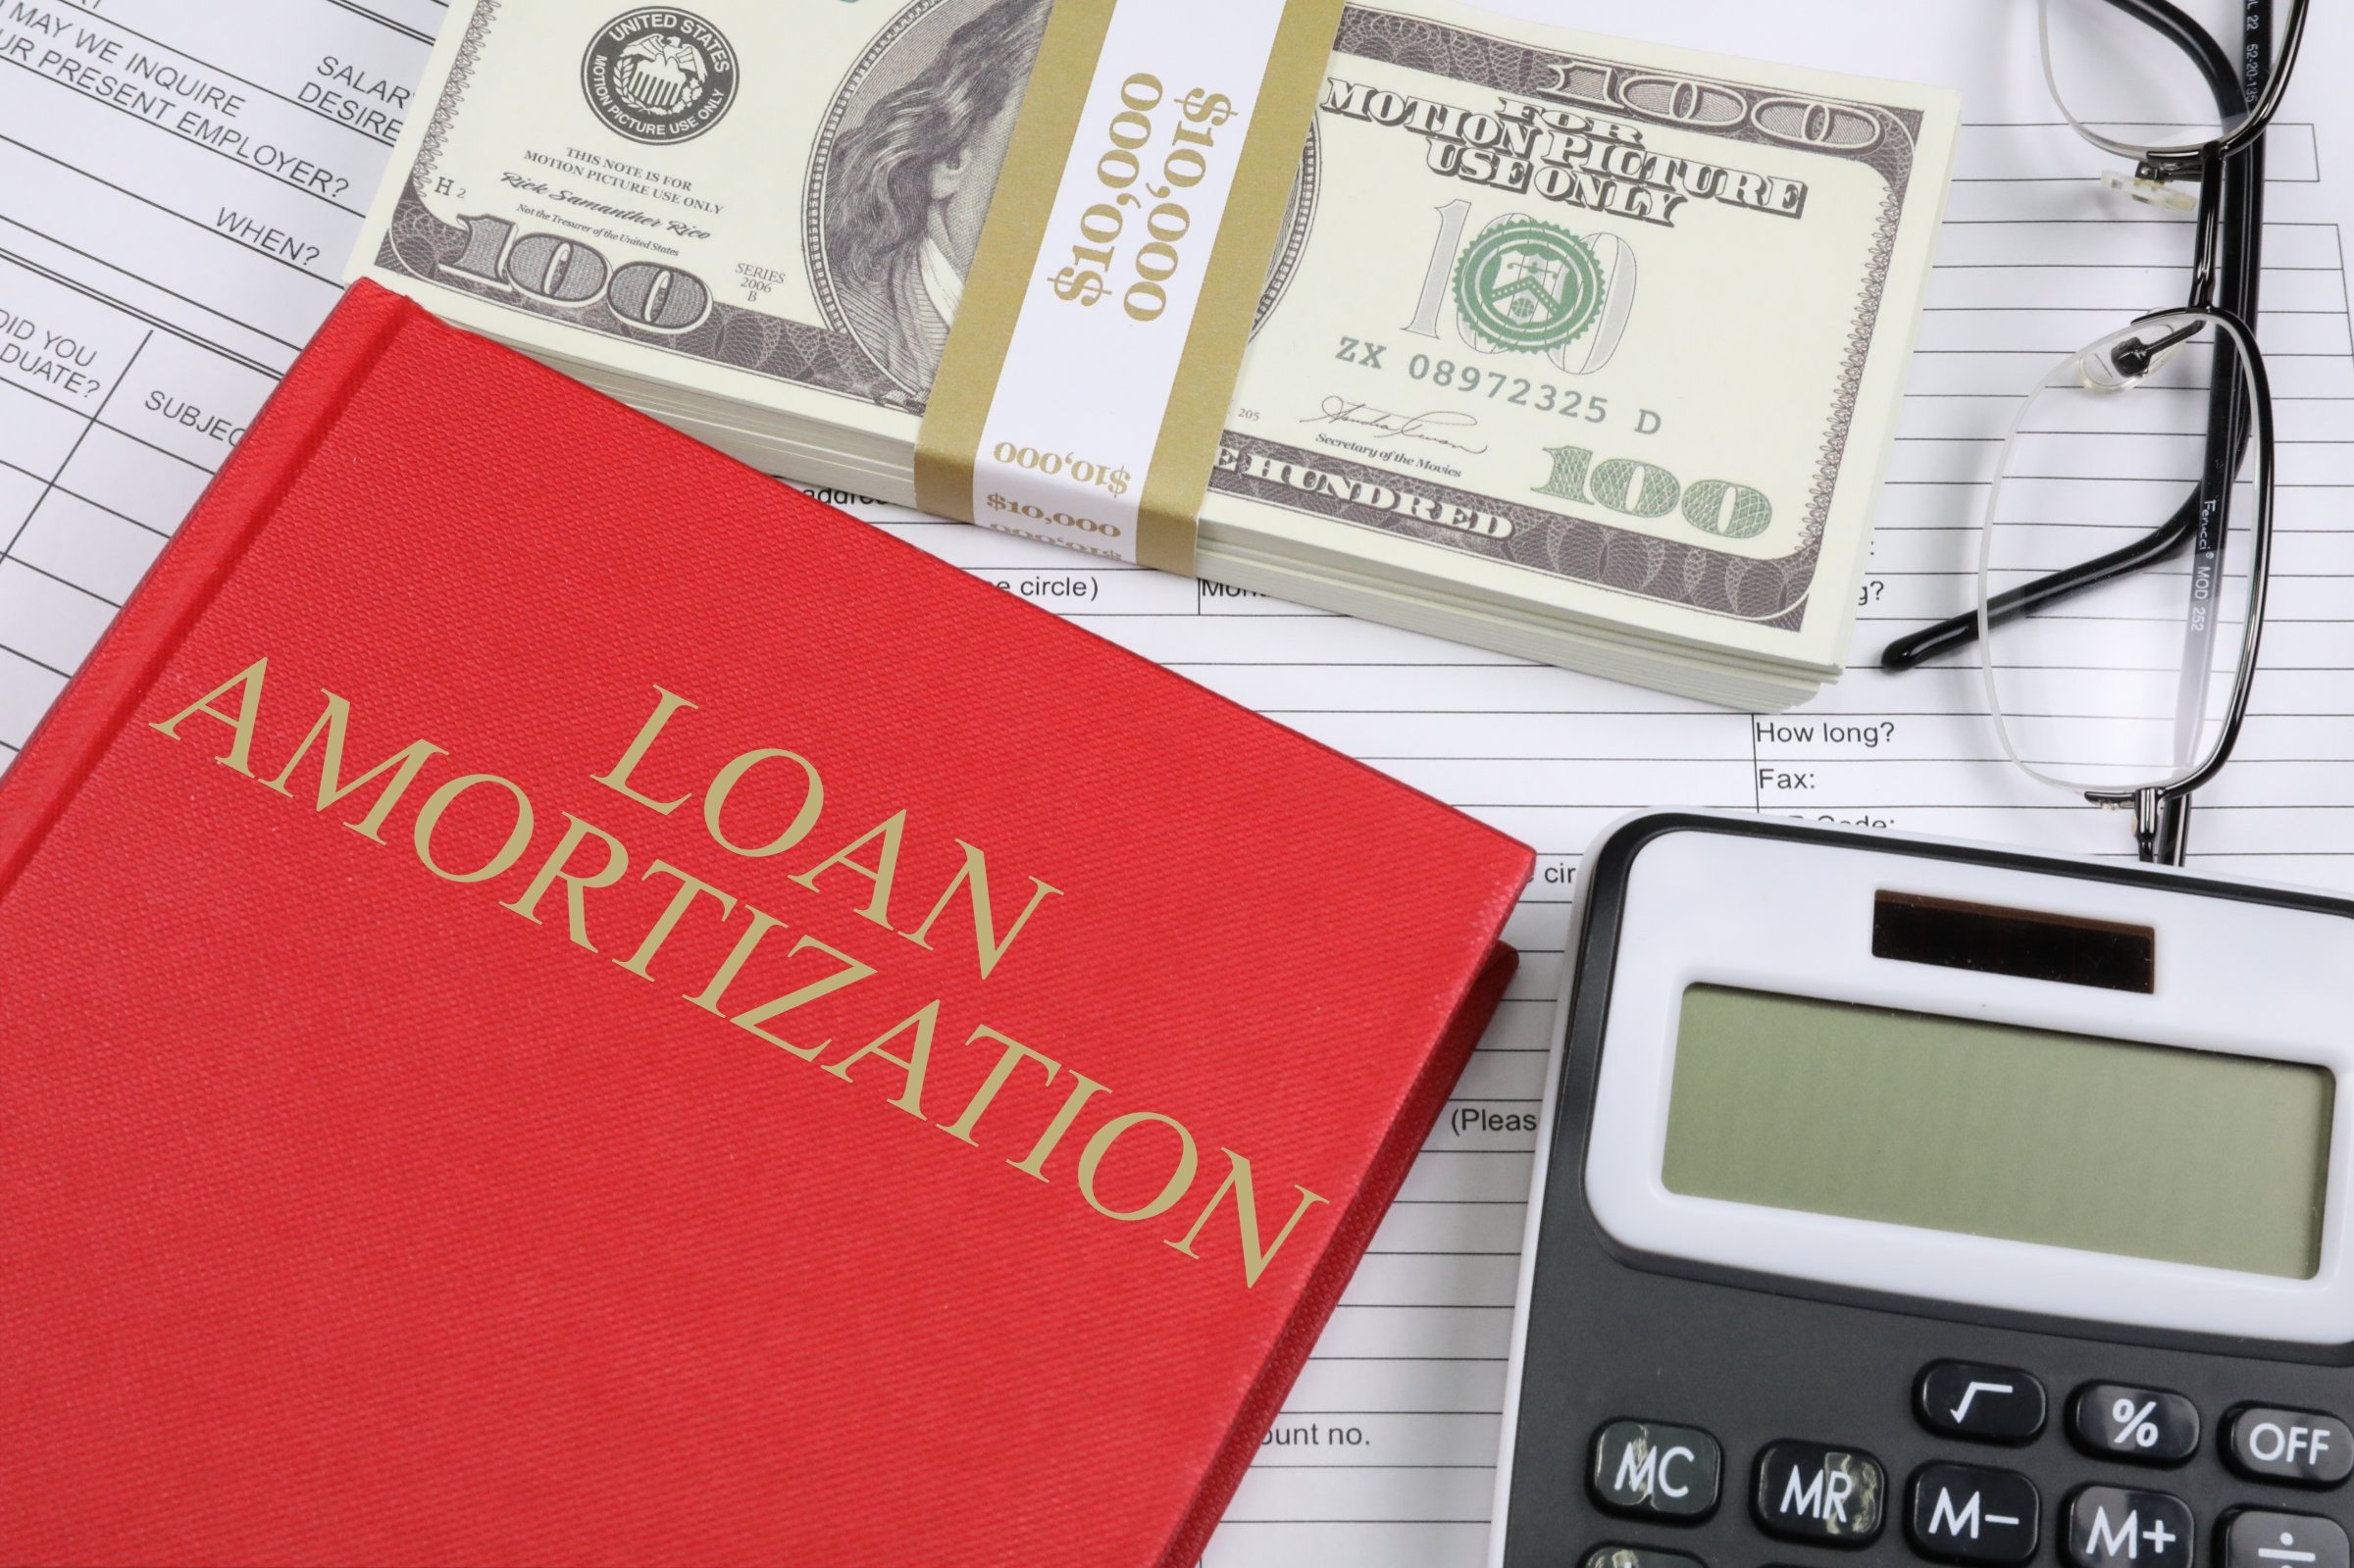 loan amortization